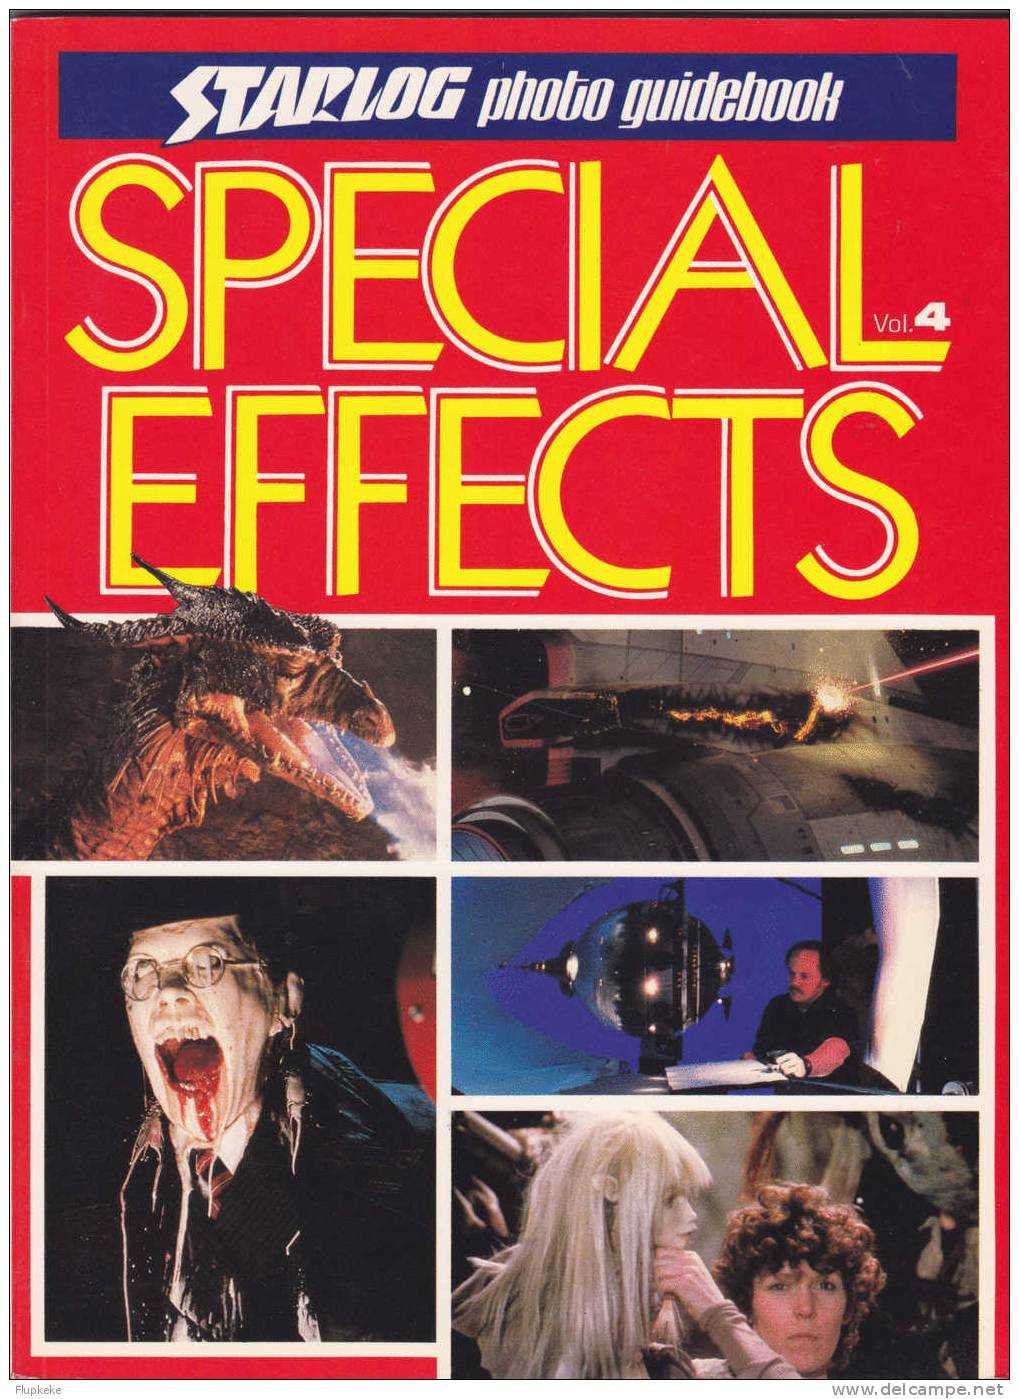 Starlog Photo Guidebook Special Effect Volume 4 David Hutchison Starlog Press - Divertimento